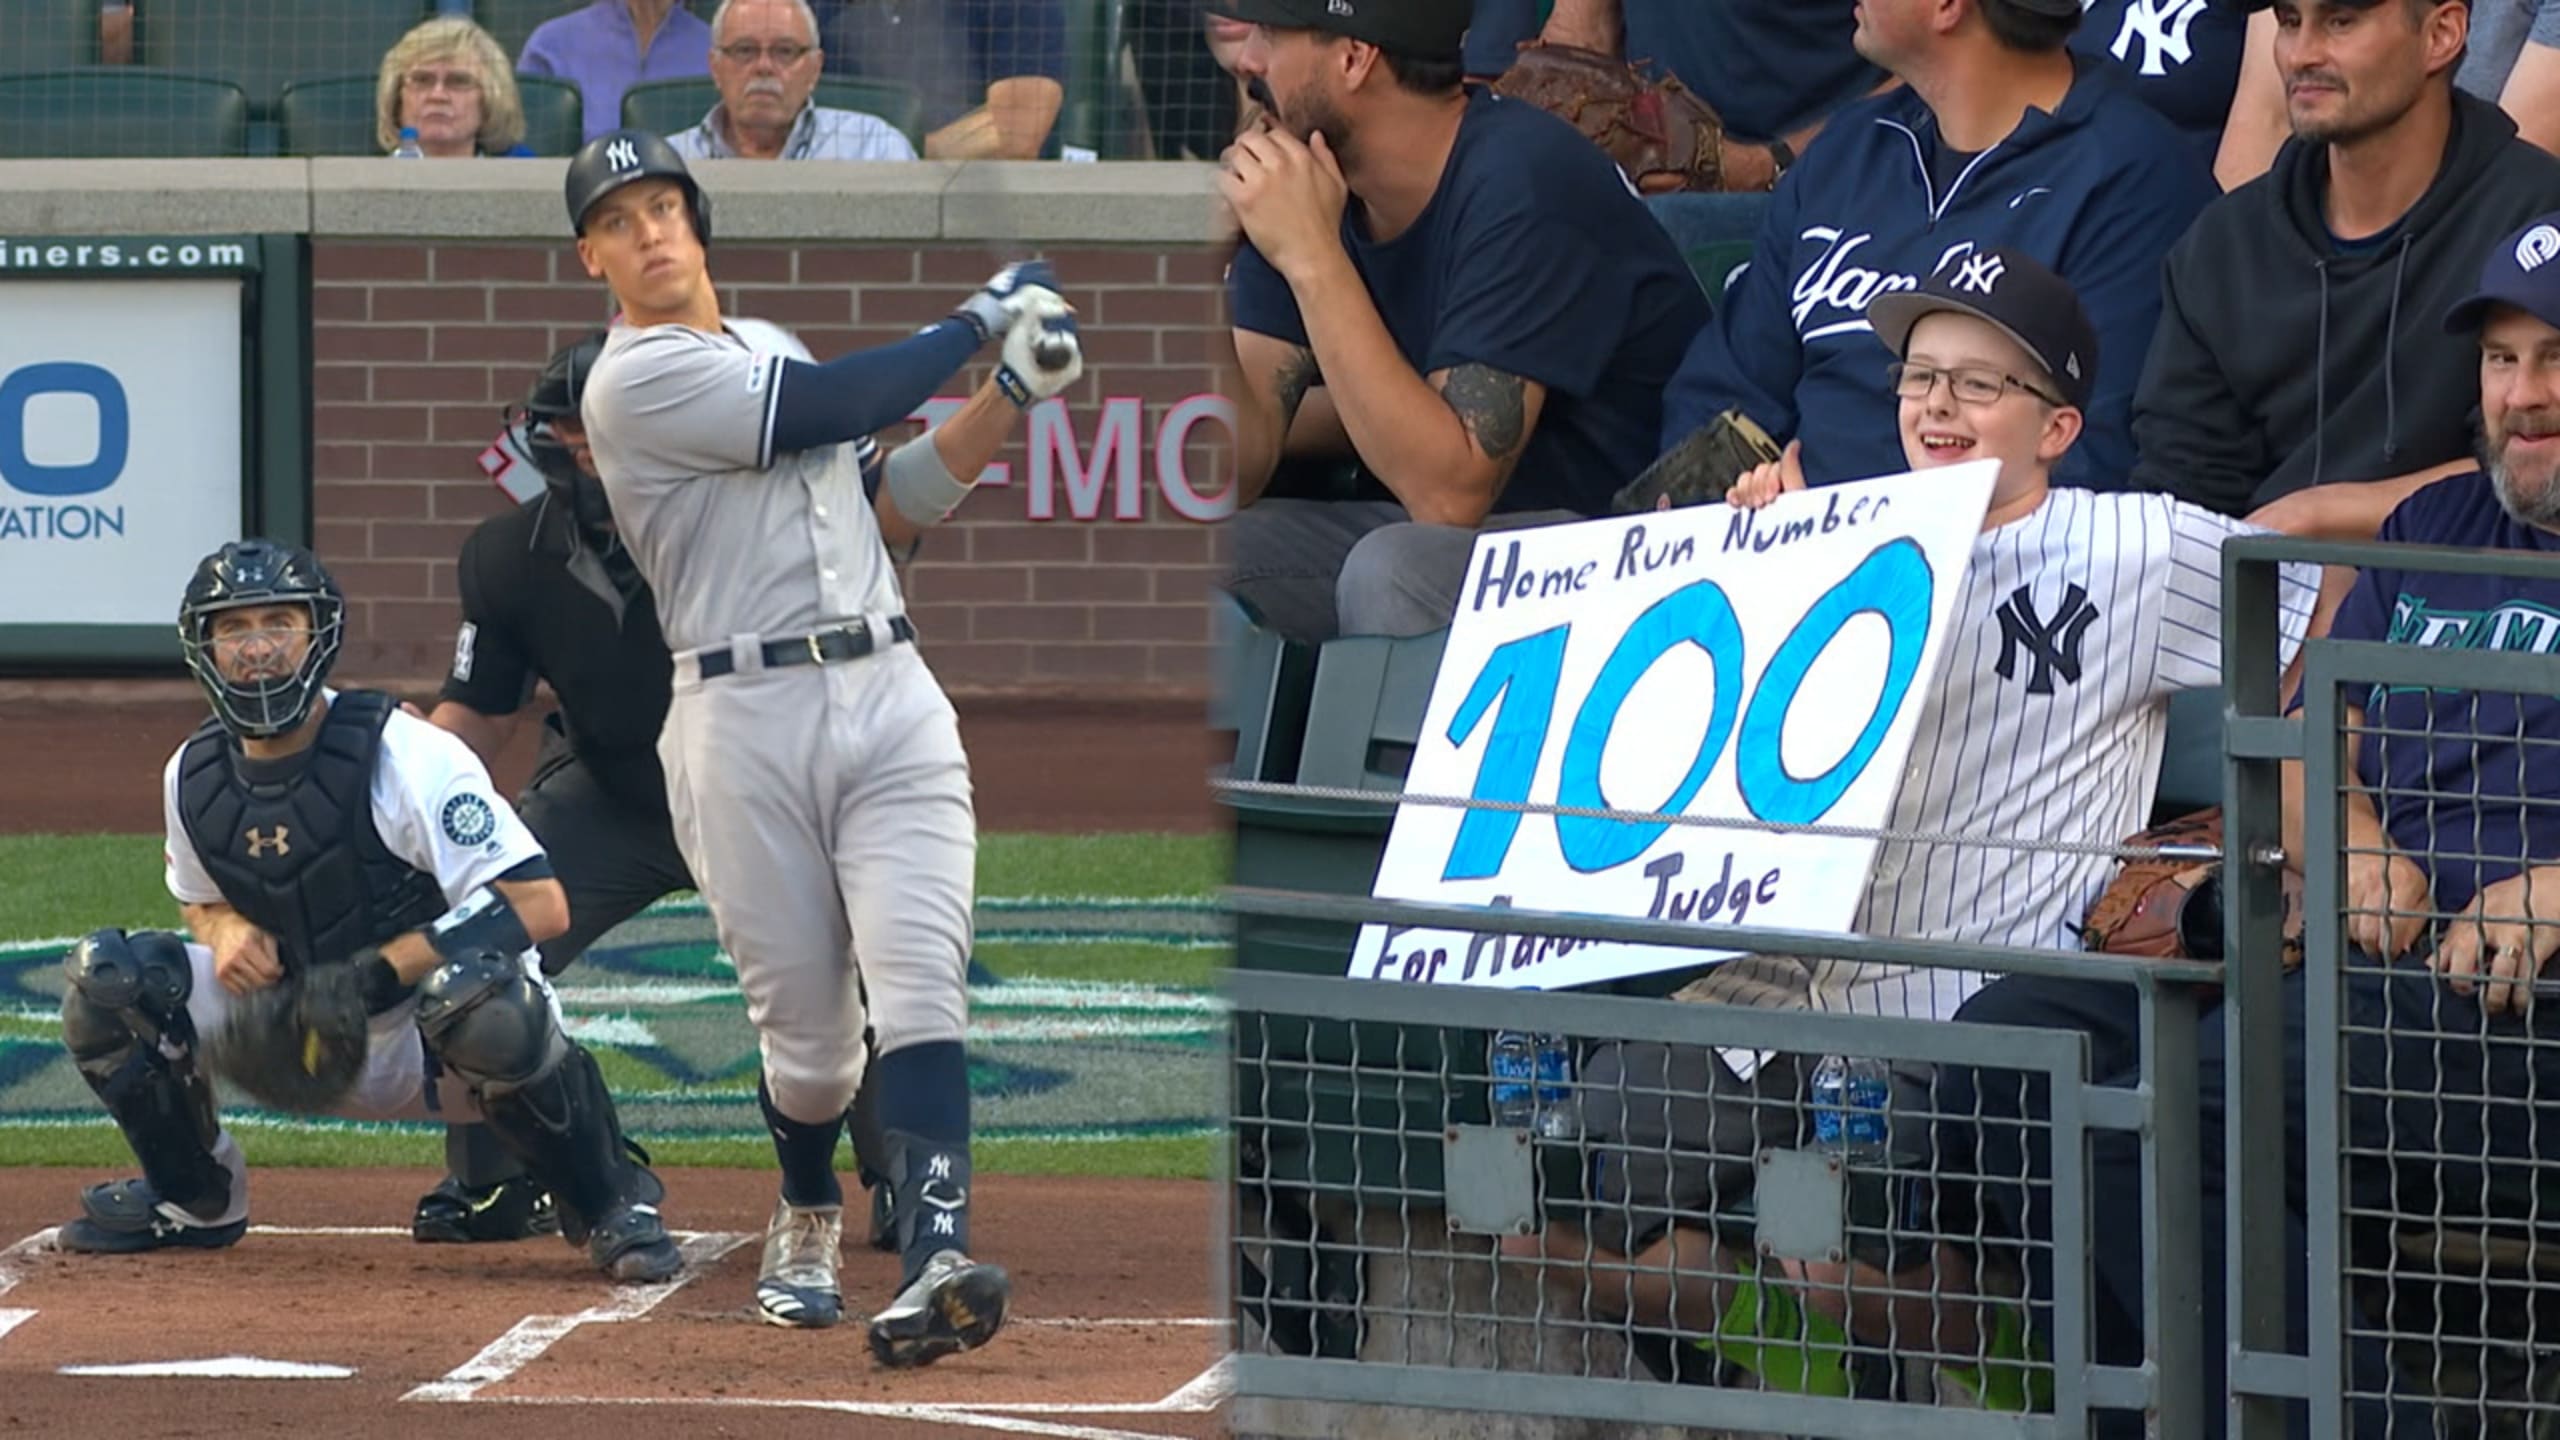 Yankees' Aaron Judge Hits 100th Career Home Run - The New York Times